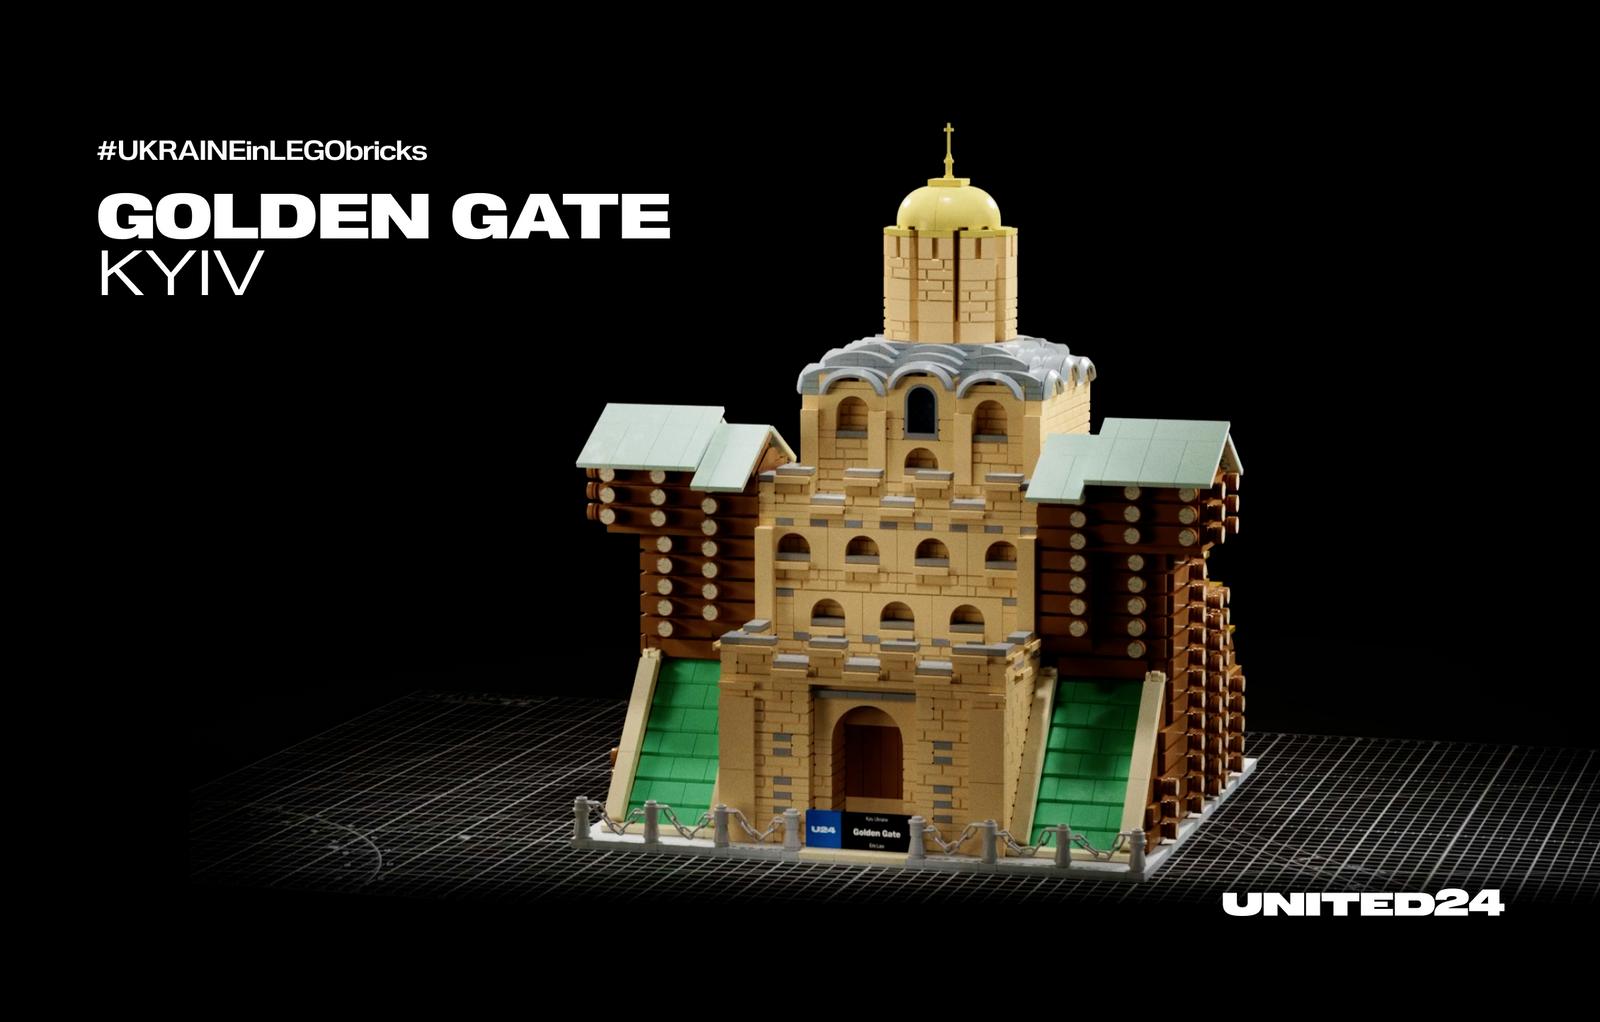 Check out the first #UKRAINEinLEGObricks set — the legendary Golden Gate!